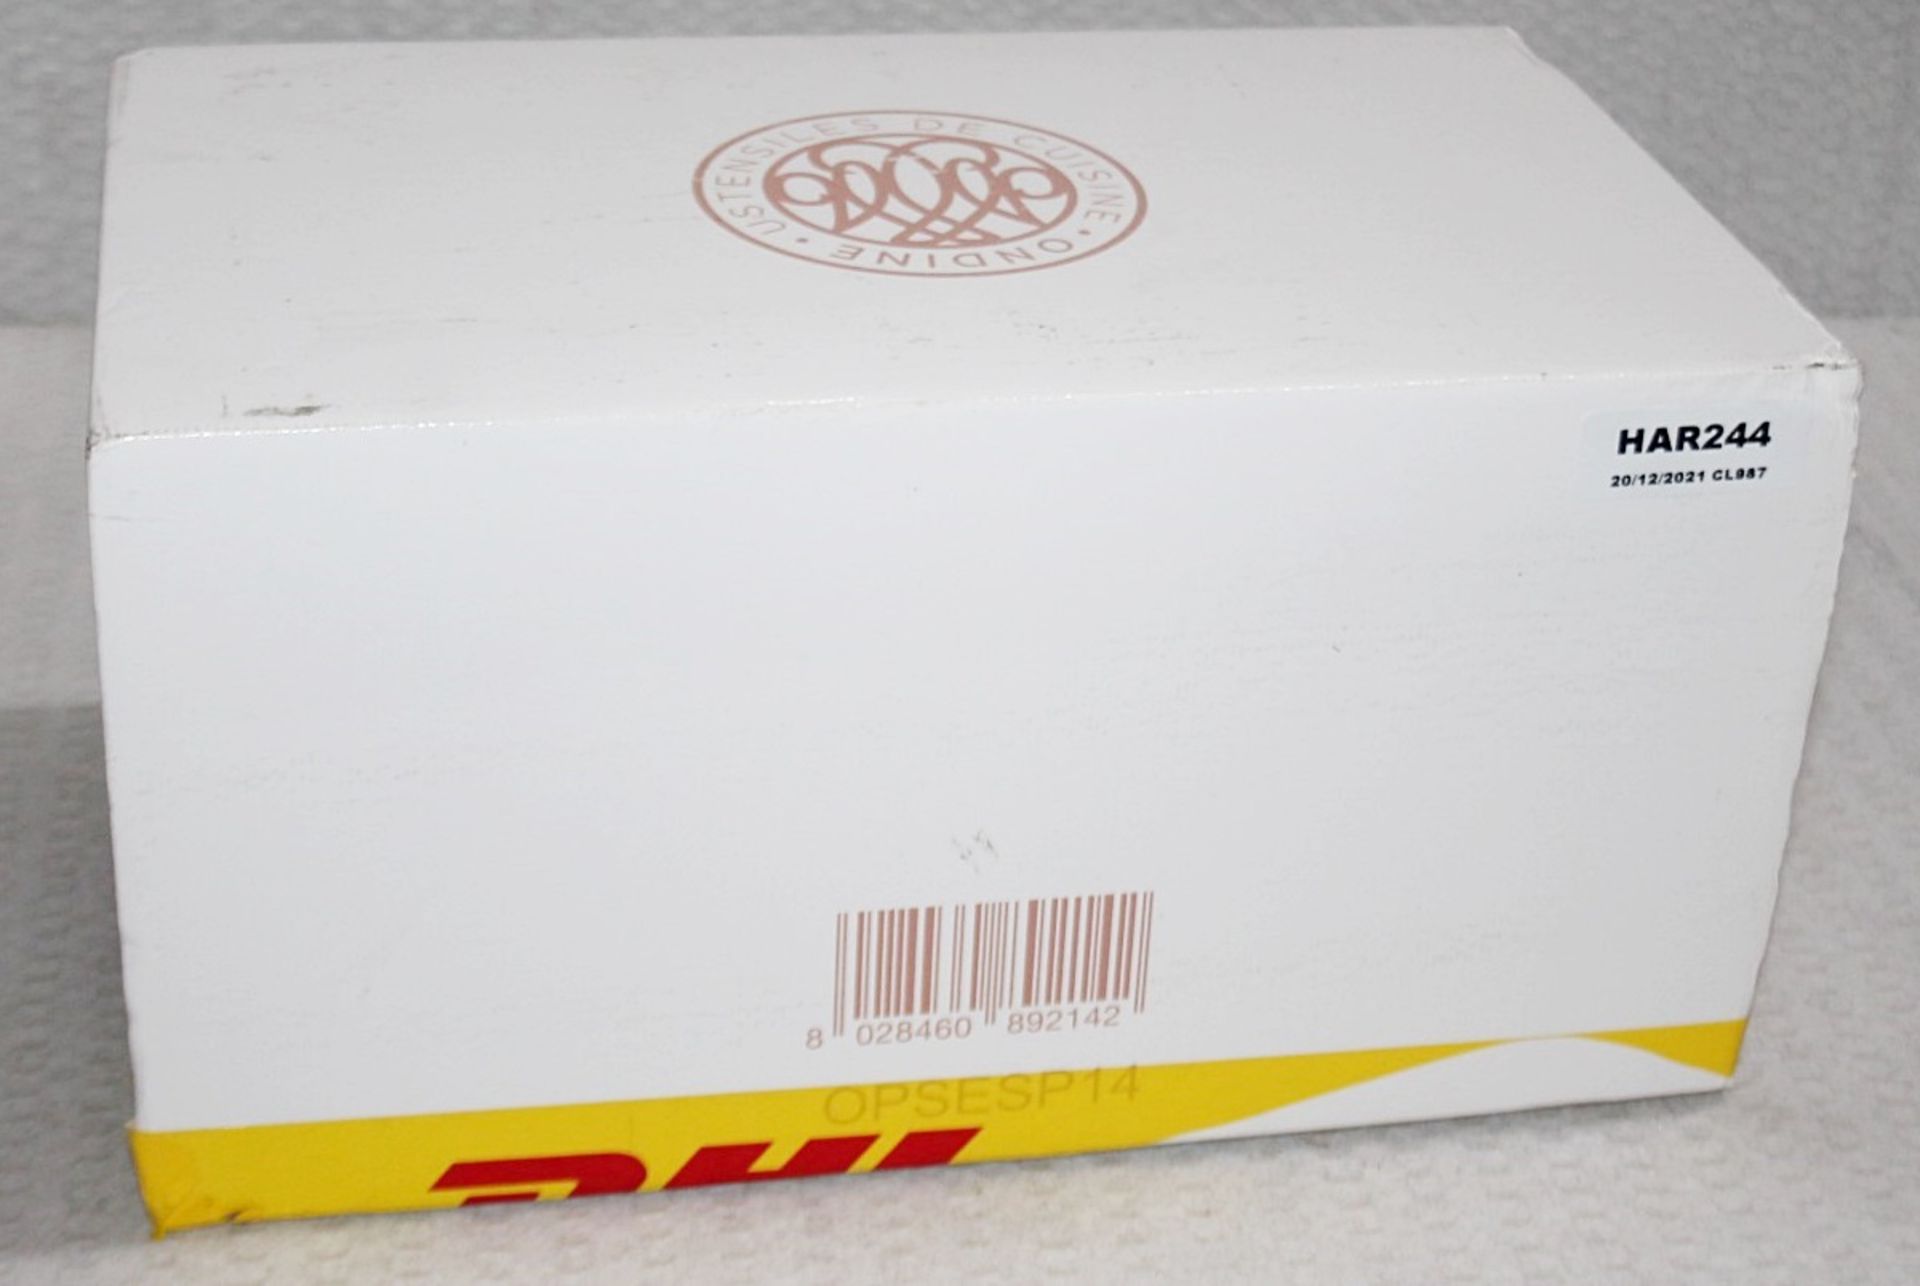 1 x ONDINE Luxury Italian Small Platine Saucepan with Lid (14cm) - Original Price £285.00 - Boxed - Image 8 of 9